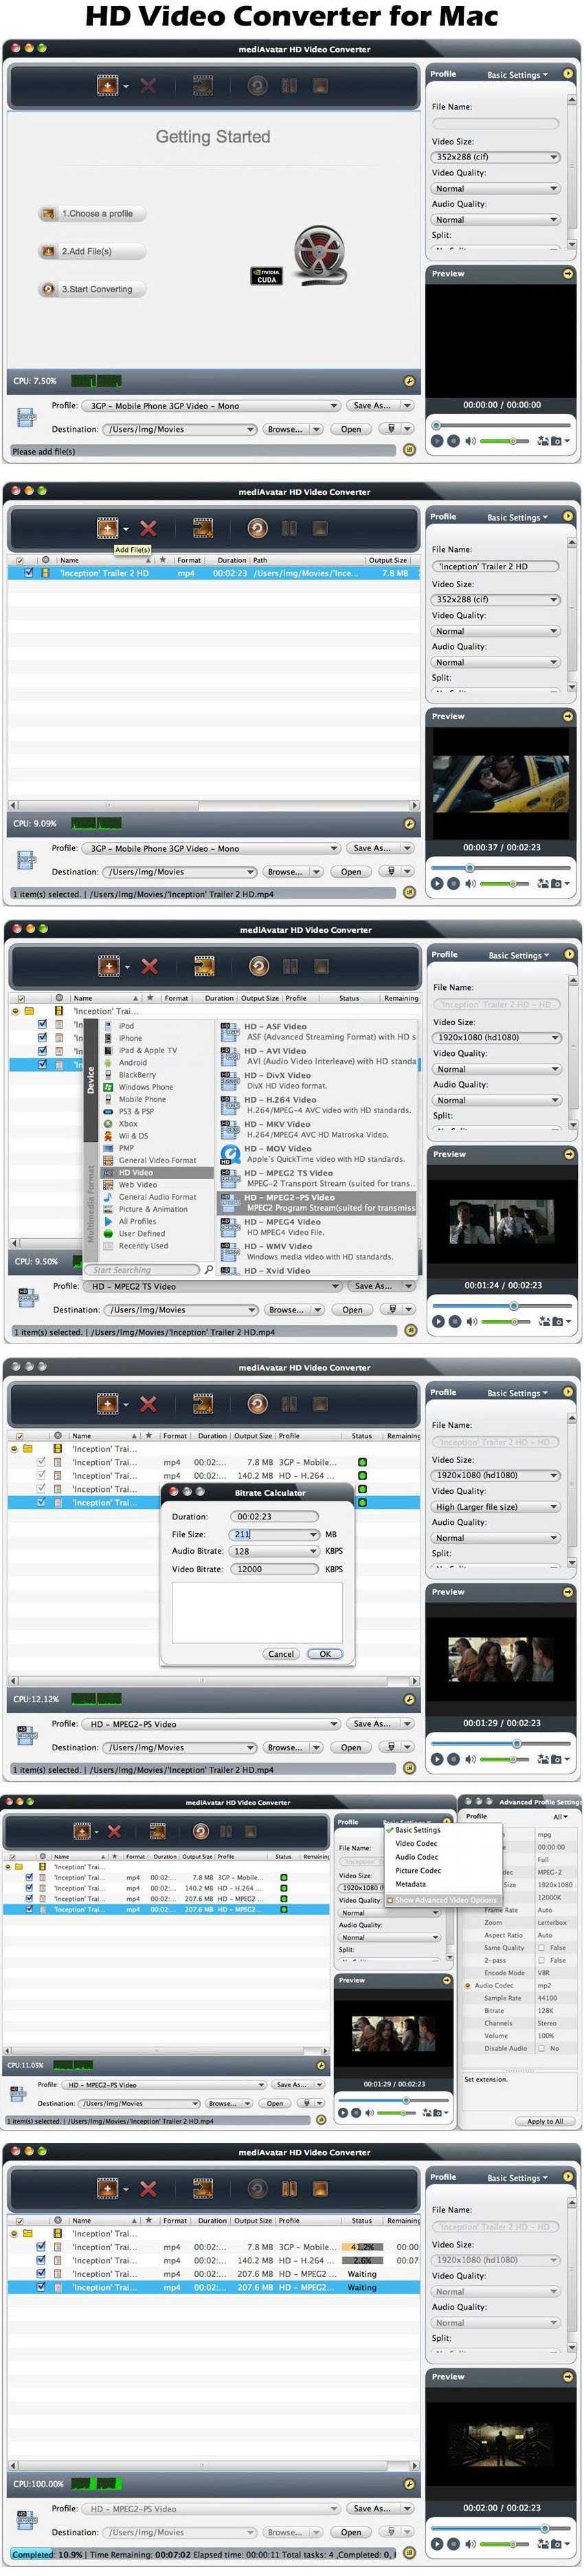 HD Video Converter Mac